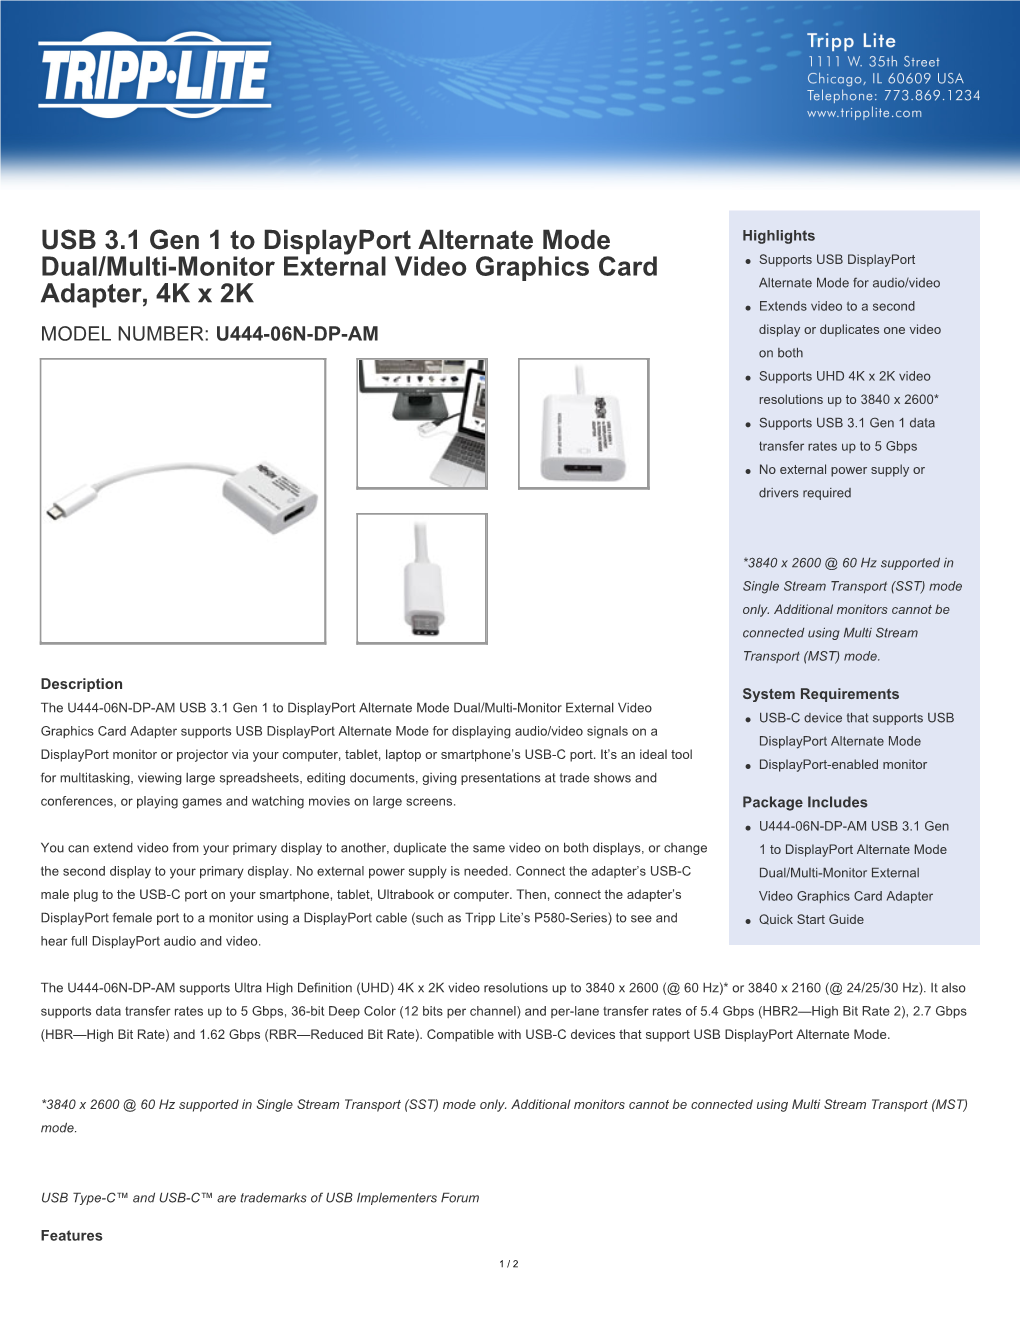 USB 3.1 Gen 1 to Displayport Alternate Mode Dual/Multi-Monitor